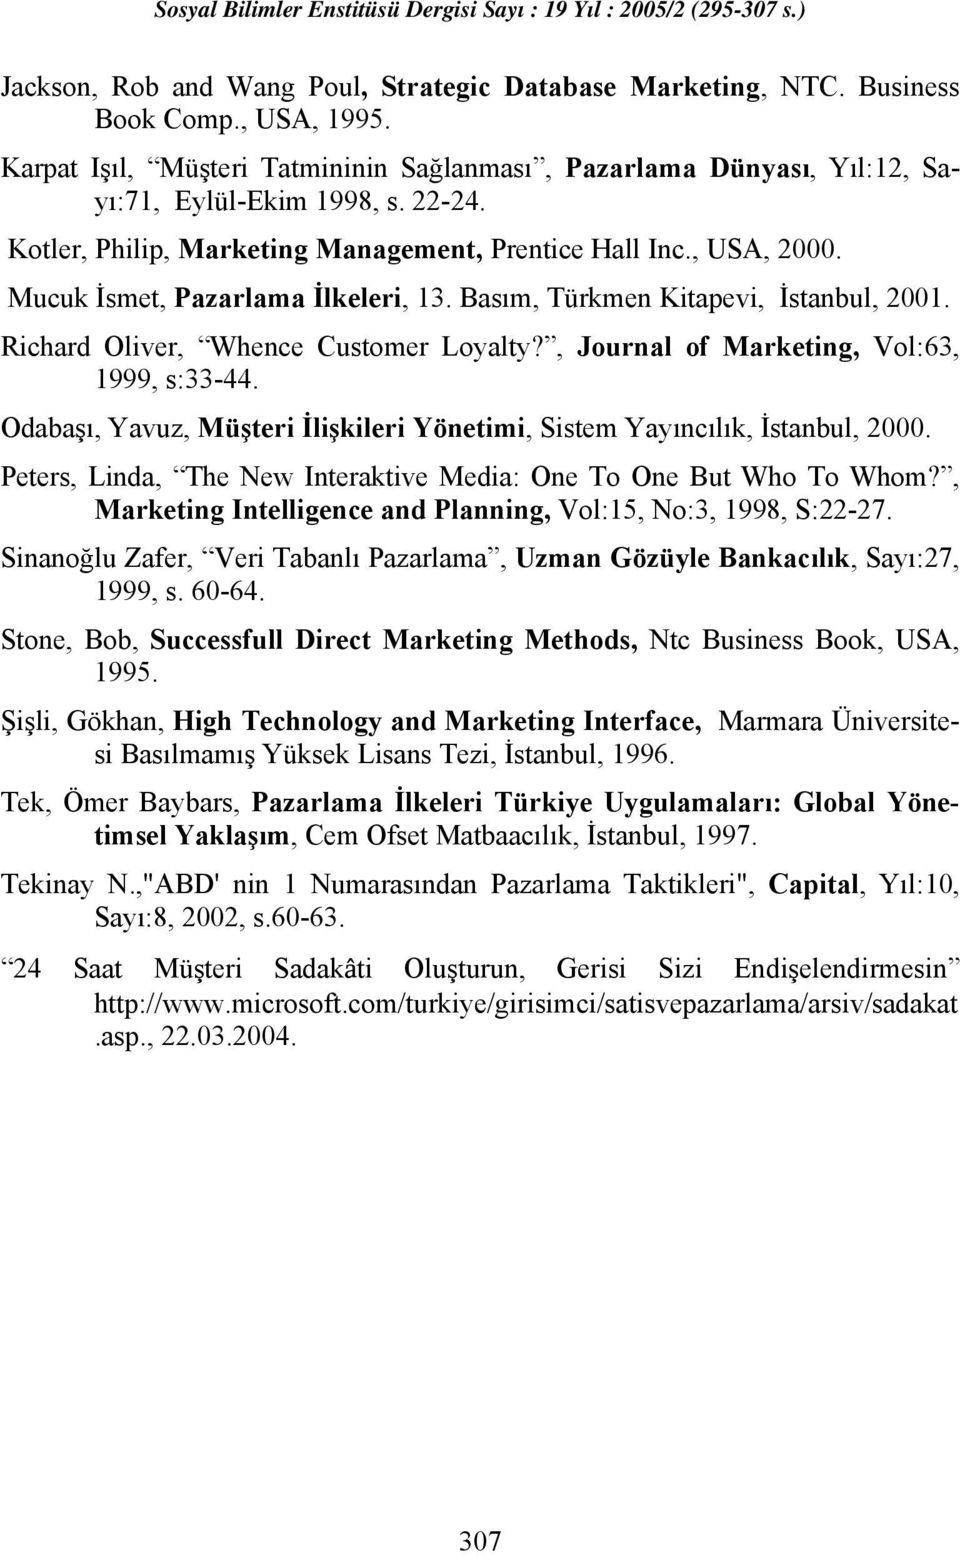 , Journal of Marketing, Vol:63, 1999, s:33-44. Odabaşı, Yavuz, Müşteri İlişkileri Yönetimi, Sistem Yayıncılık, İstanbul, 2000. Peters, Linda, The New Interaktive Media: One To One But Who To Whom?